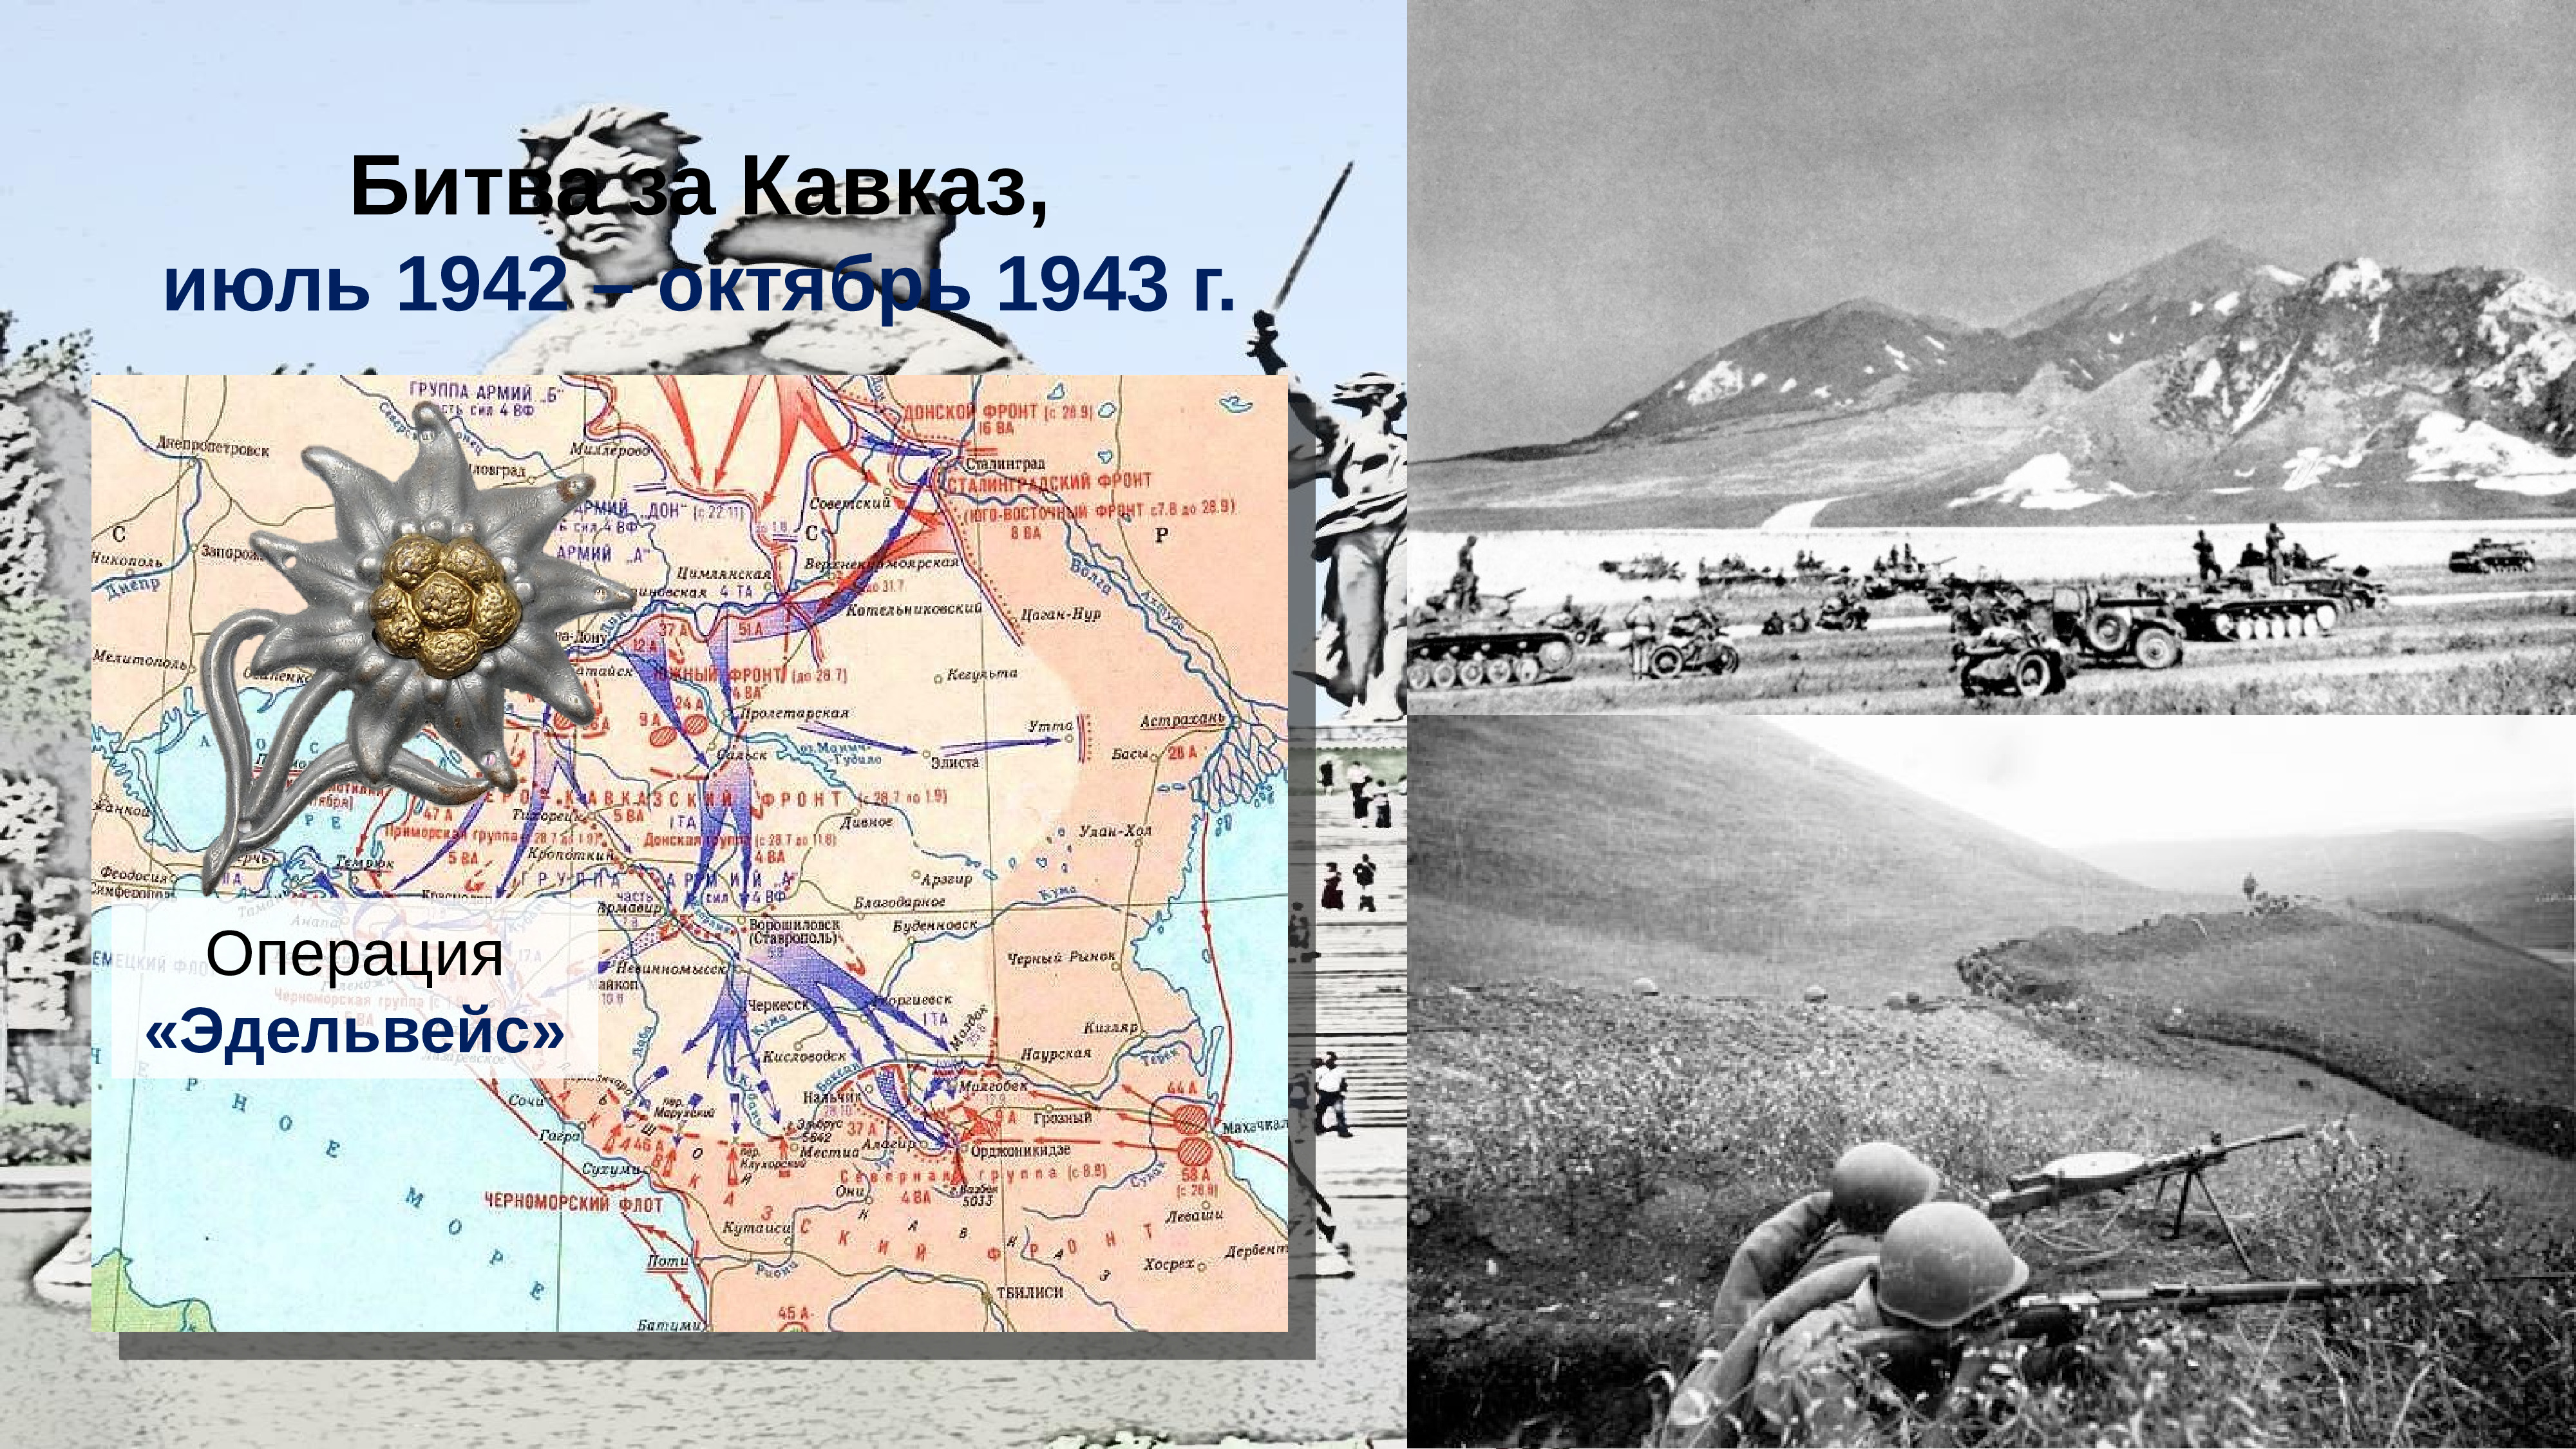 9 Октября 1943 года битва за Кавказ